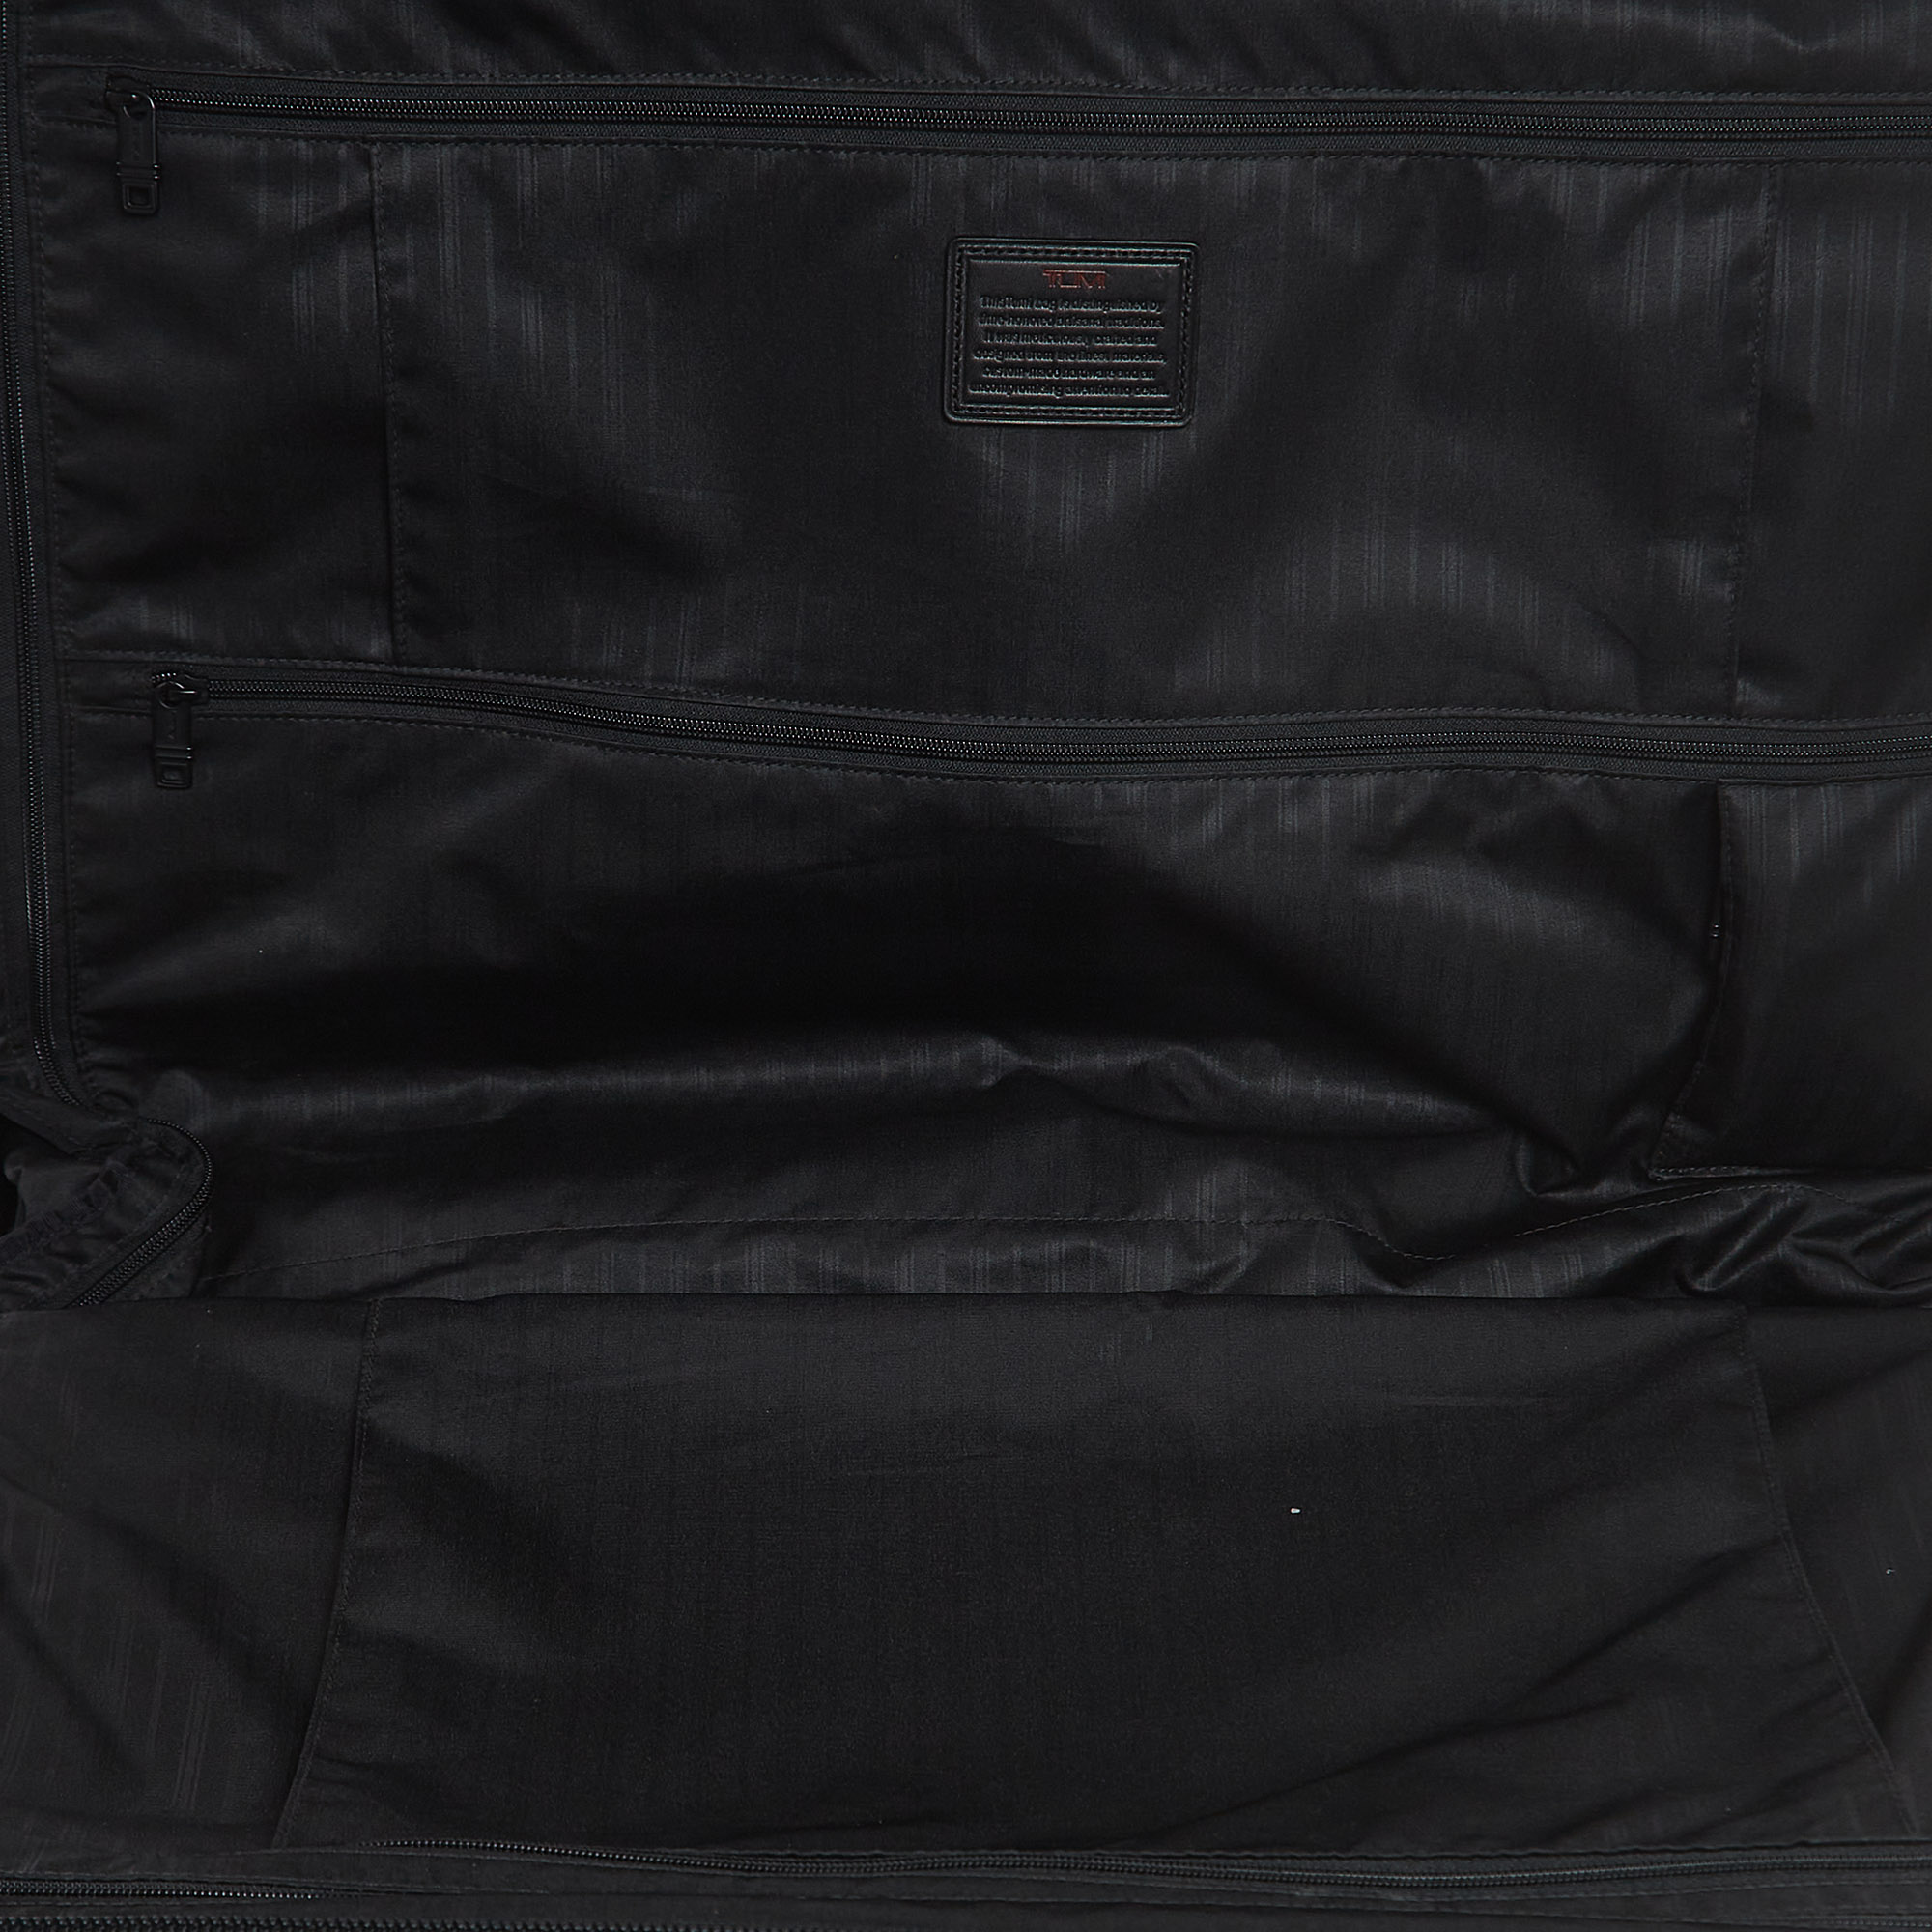 TUMI Black Nylon 2 Wheeled Alpha Classic Garment Luggage